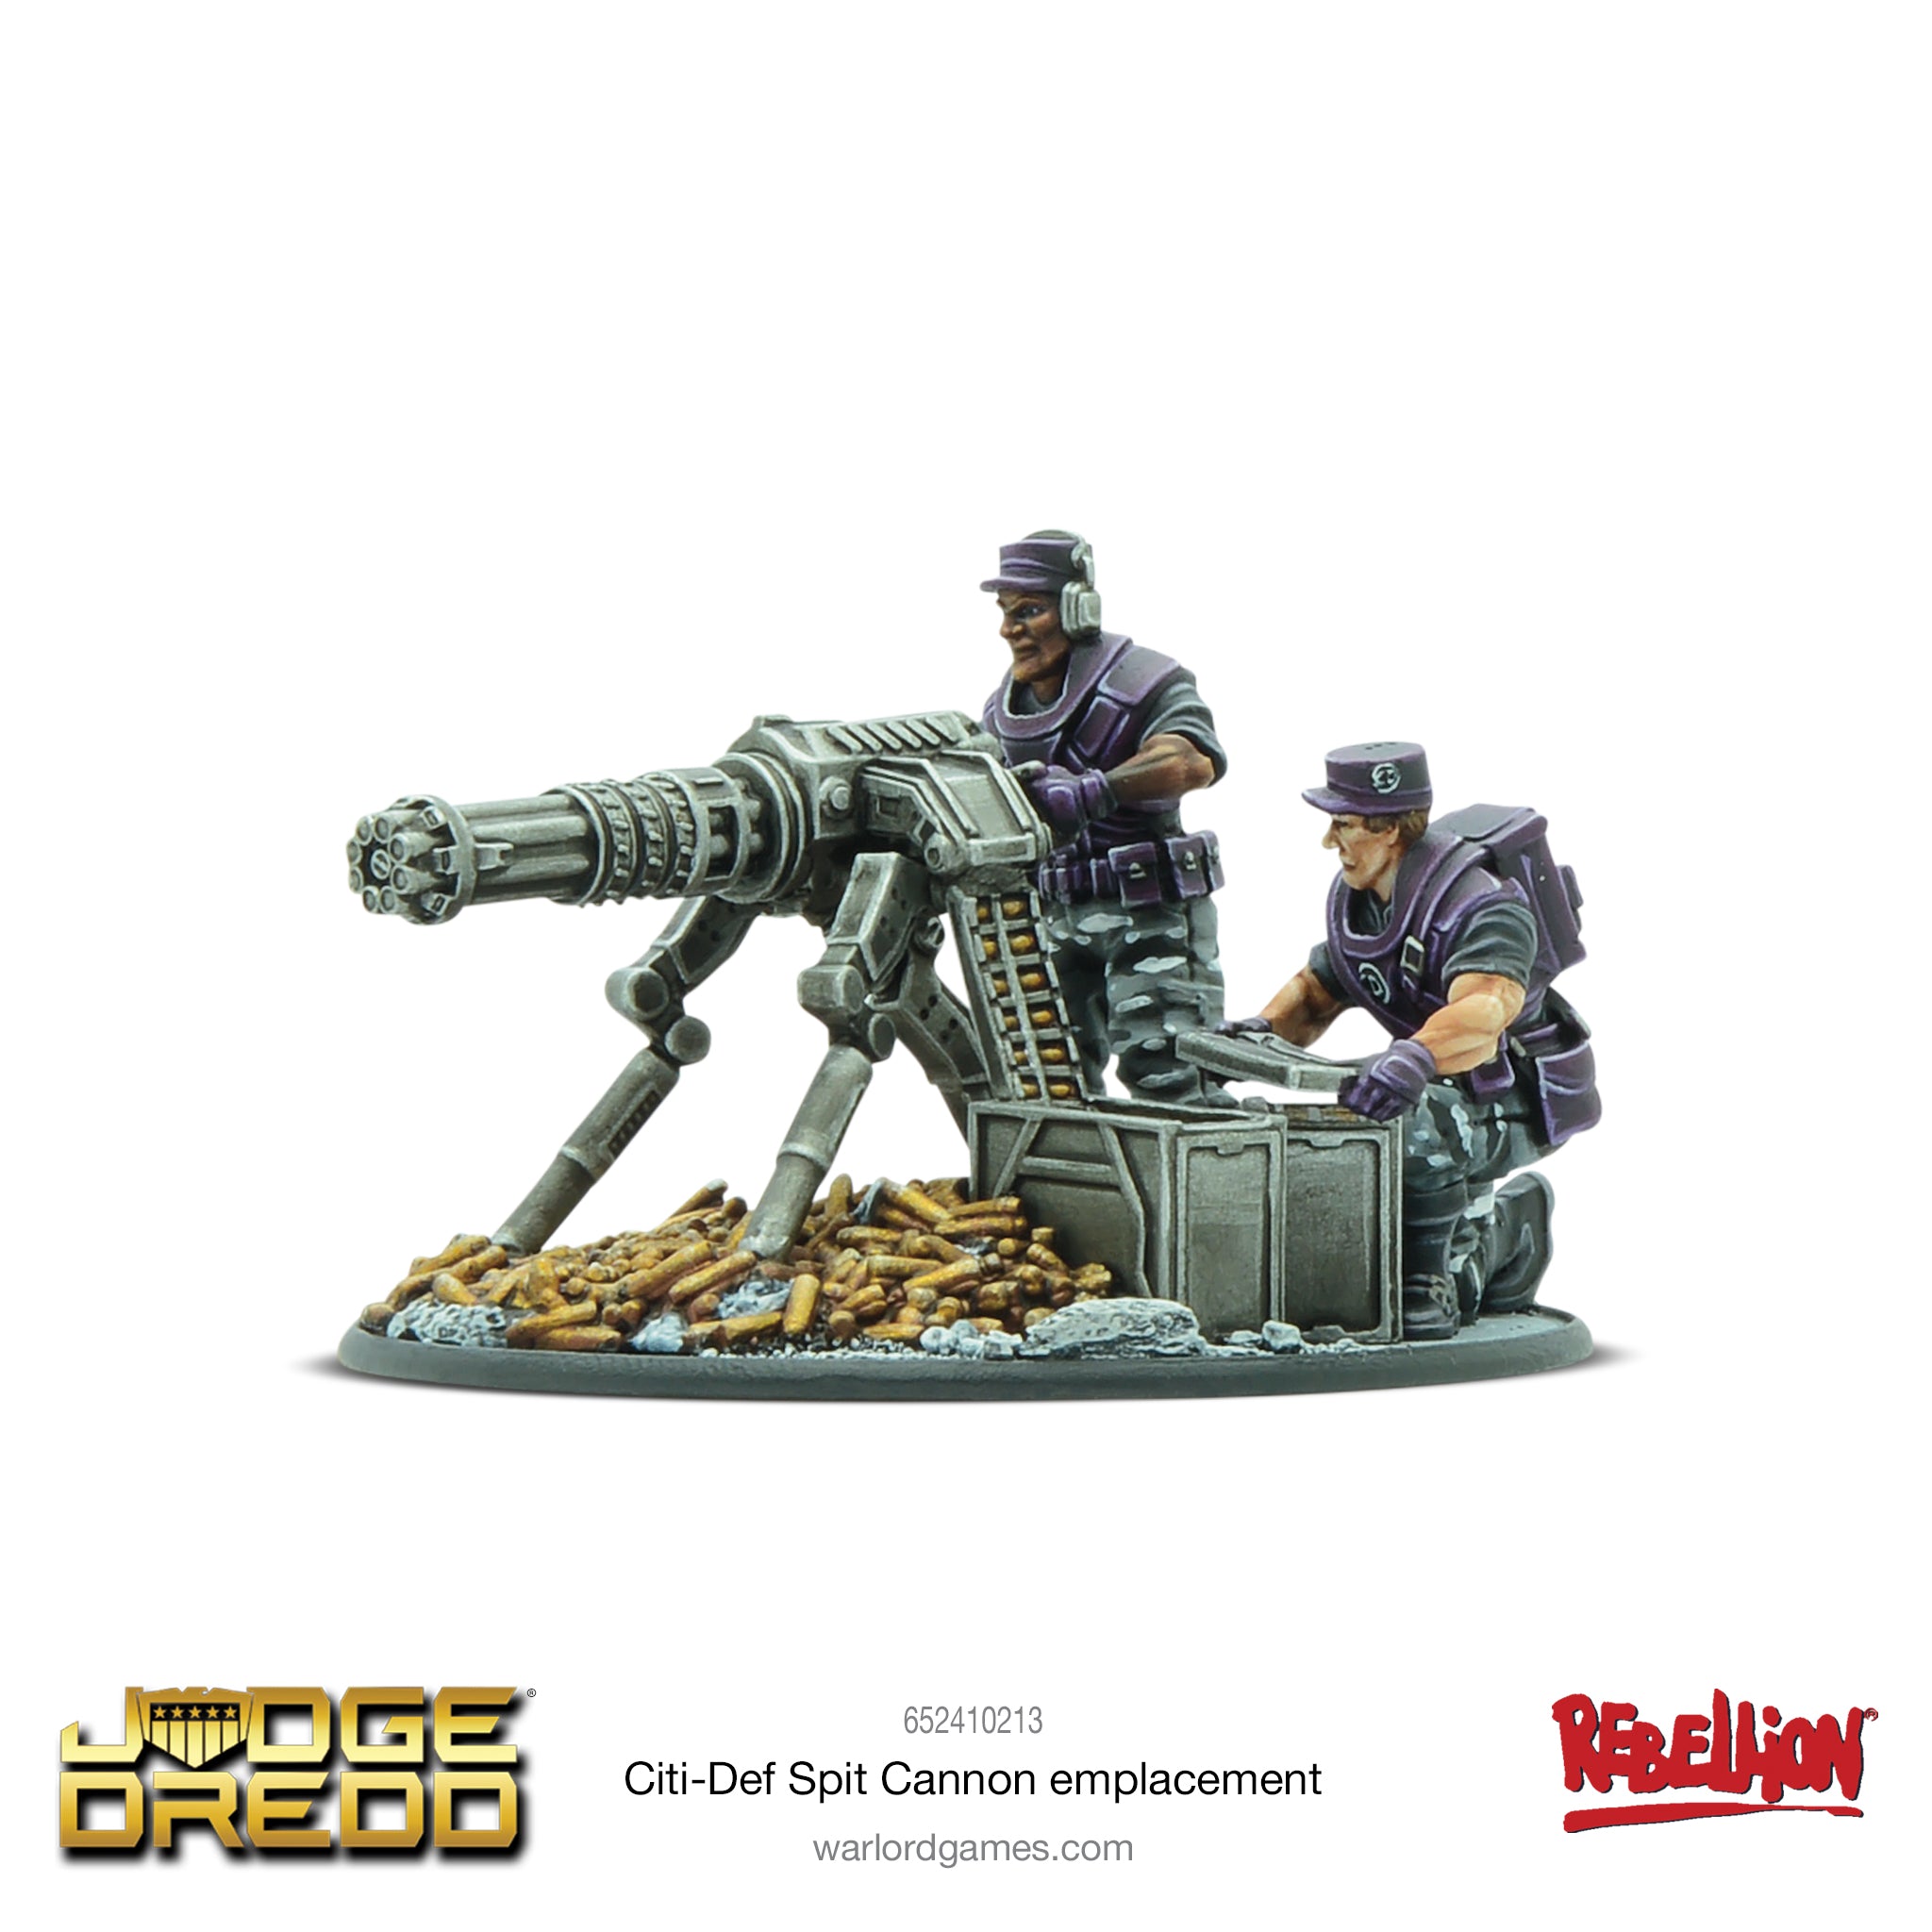 Judge Dredd: Citi-Def Spit Cannon emplacement